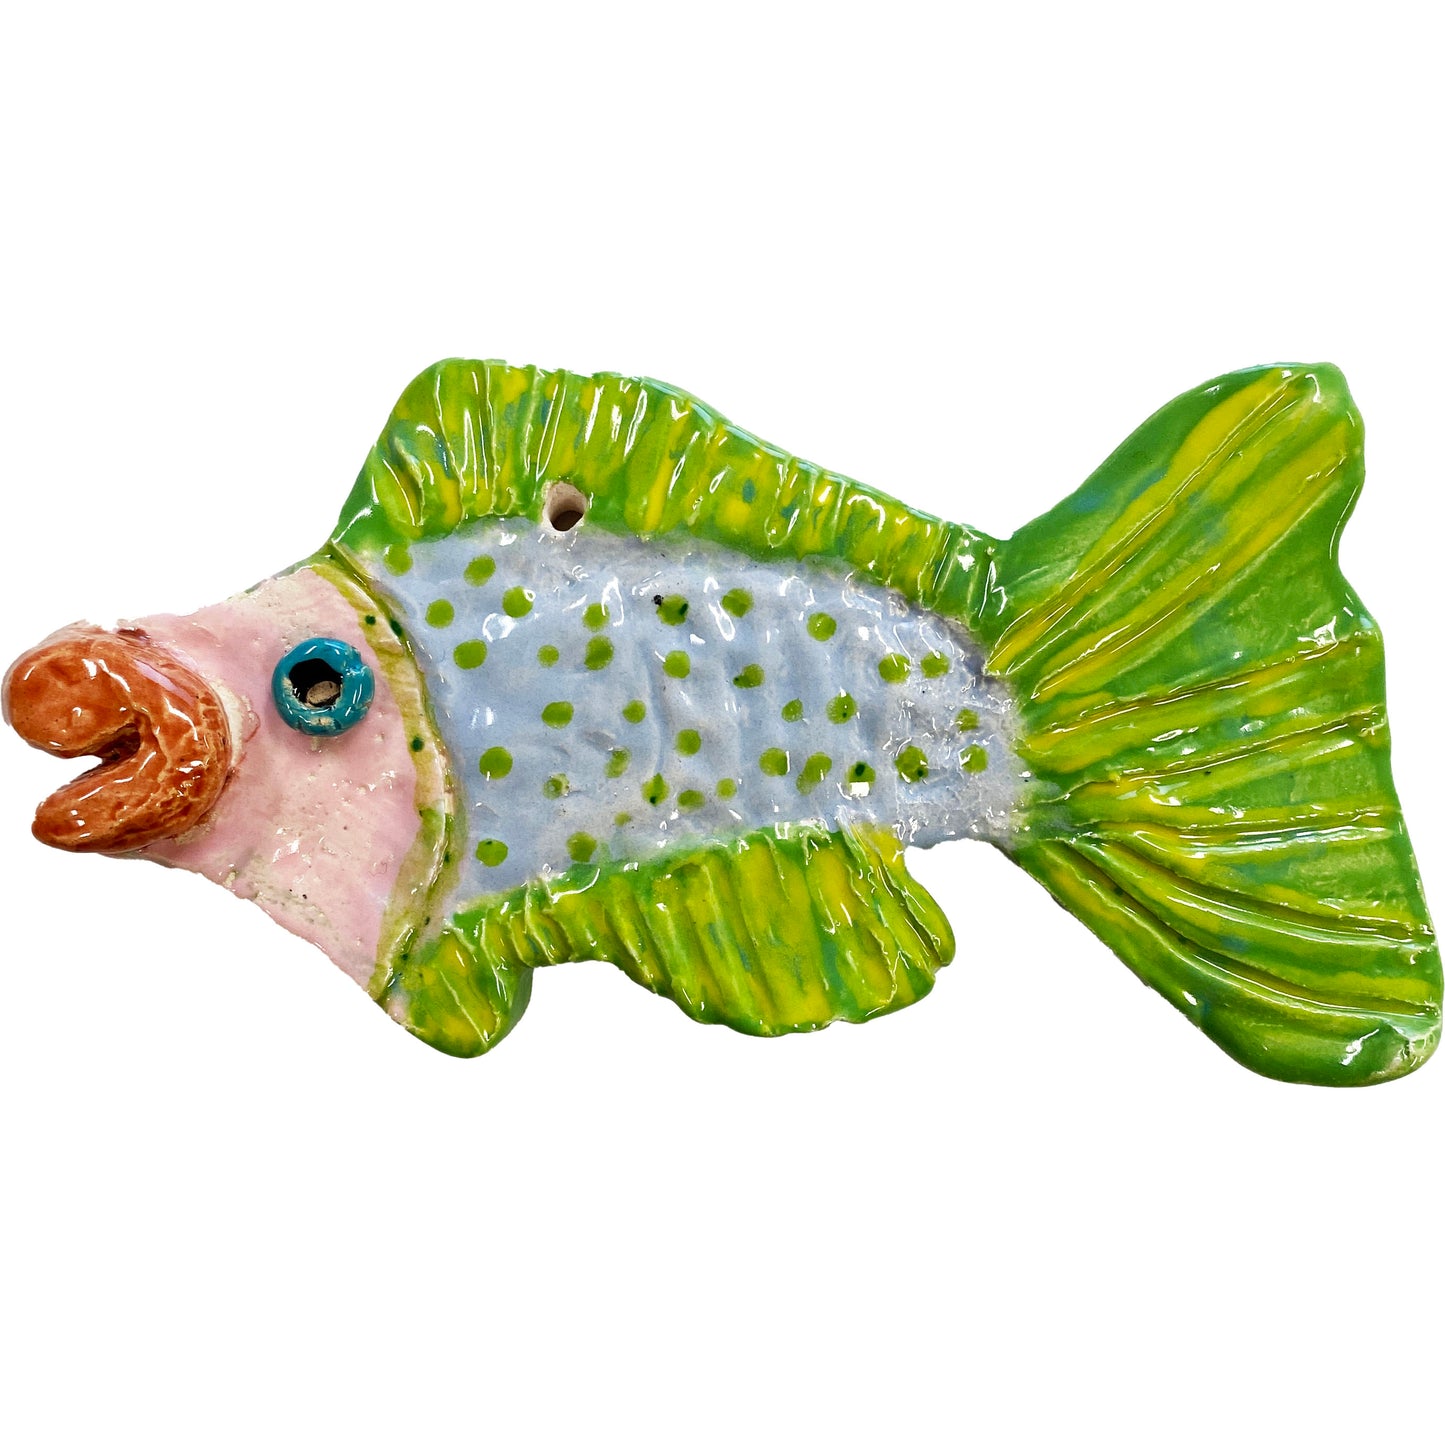 Ceramic Arts Handmade Clay Crafts Fresh Fish Glazed 6-inch x 3-inch made by Ryan Pinder